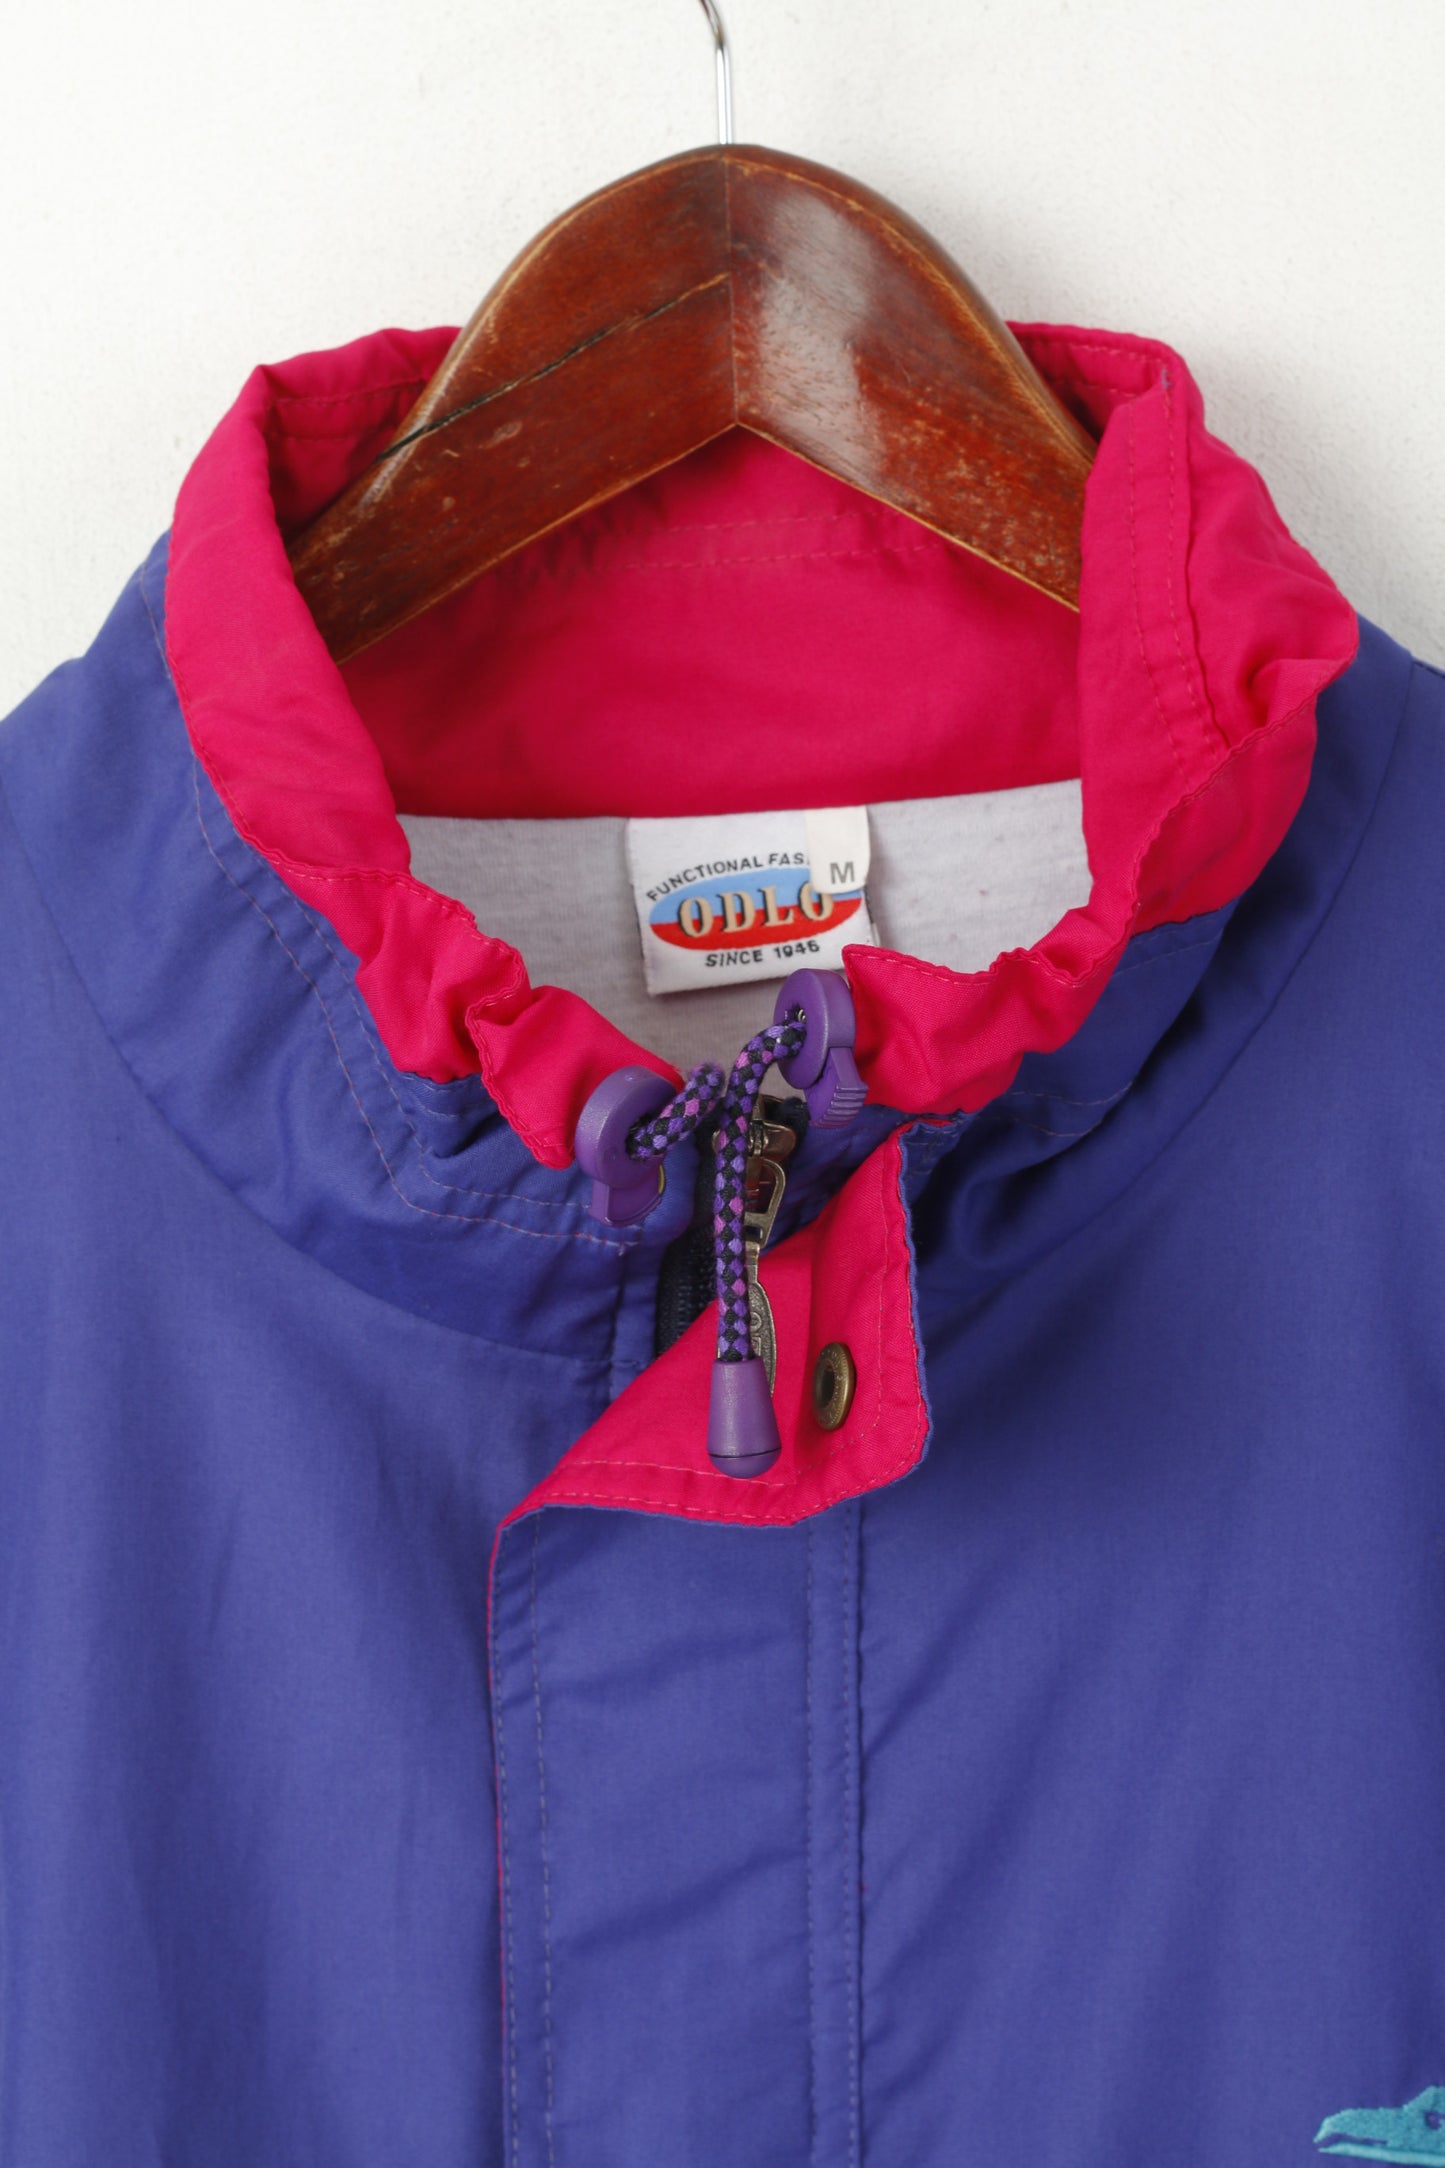 Odlo Men M Jacket Purple Vintage Nylon Full Zip Athletic Clothing System Sport Top